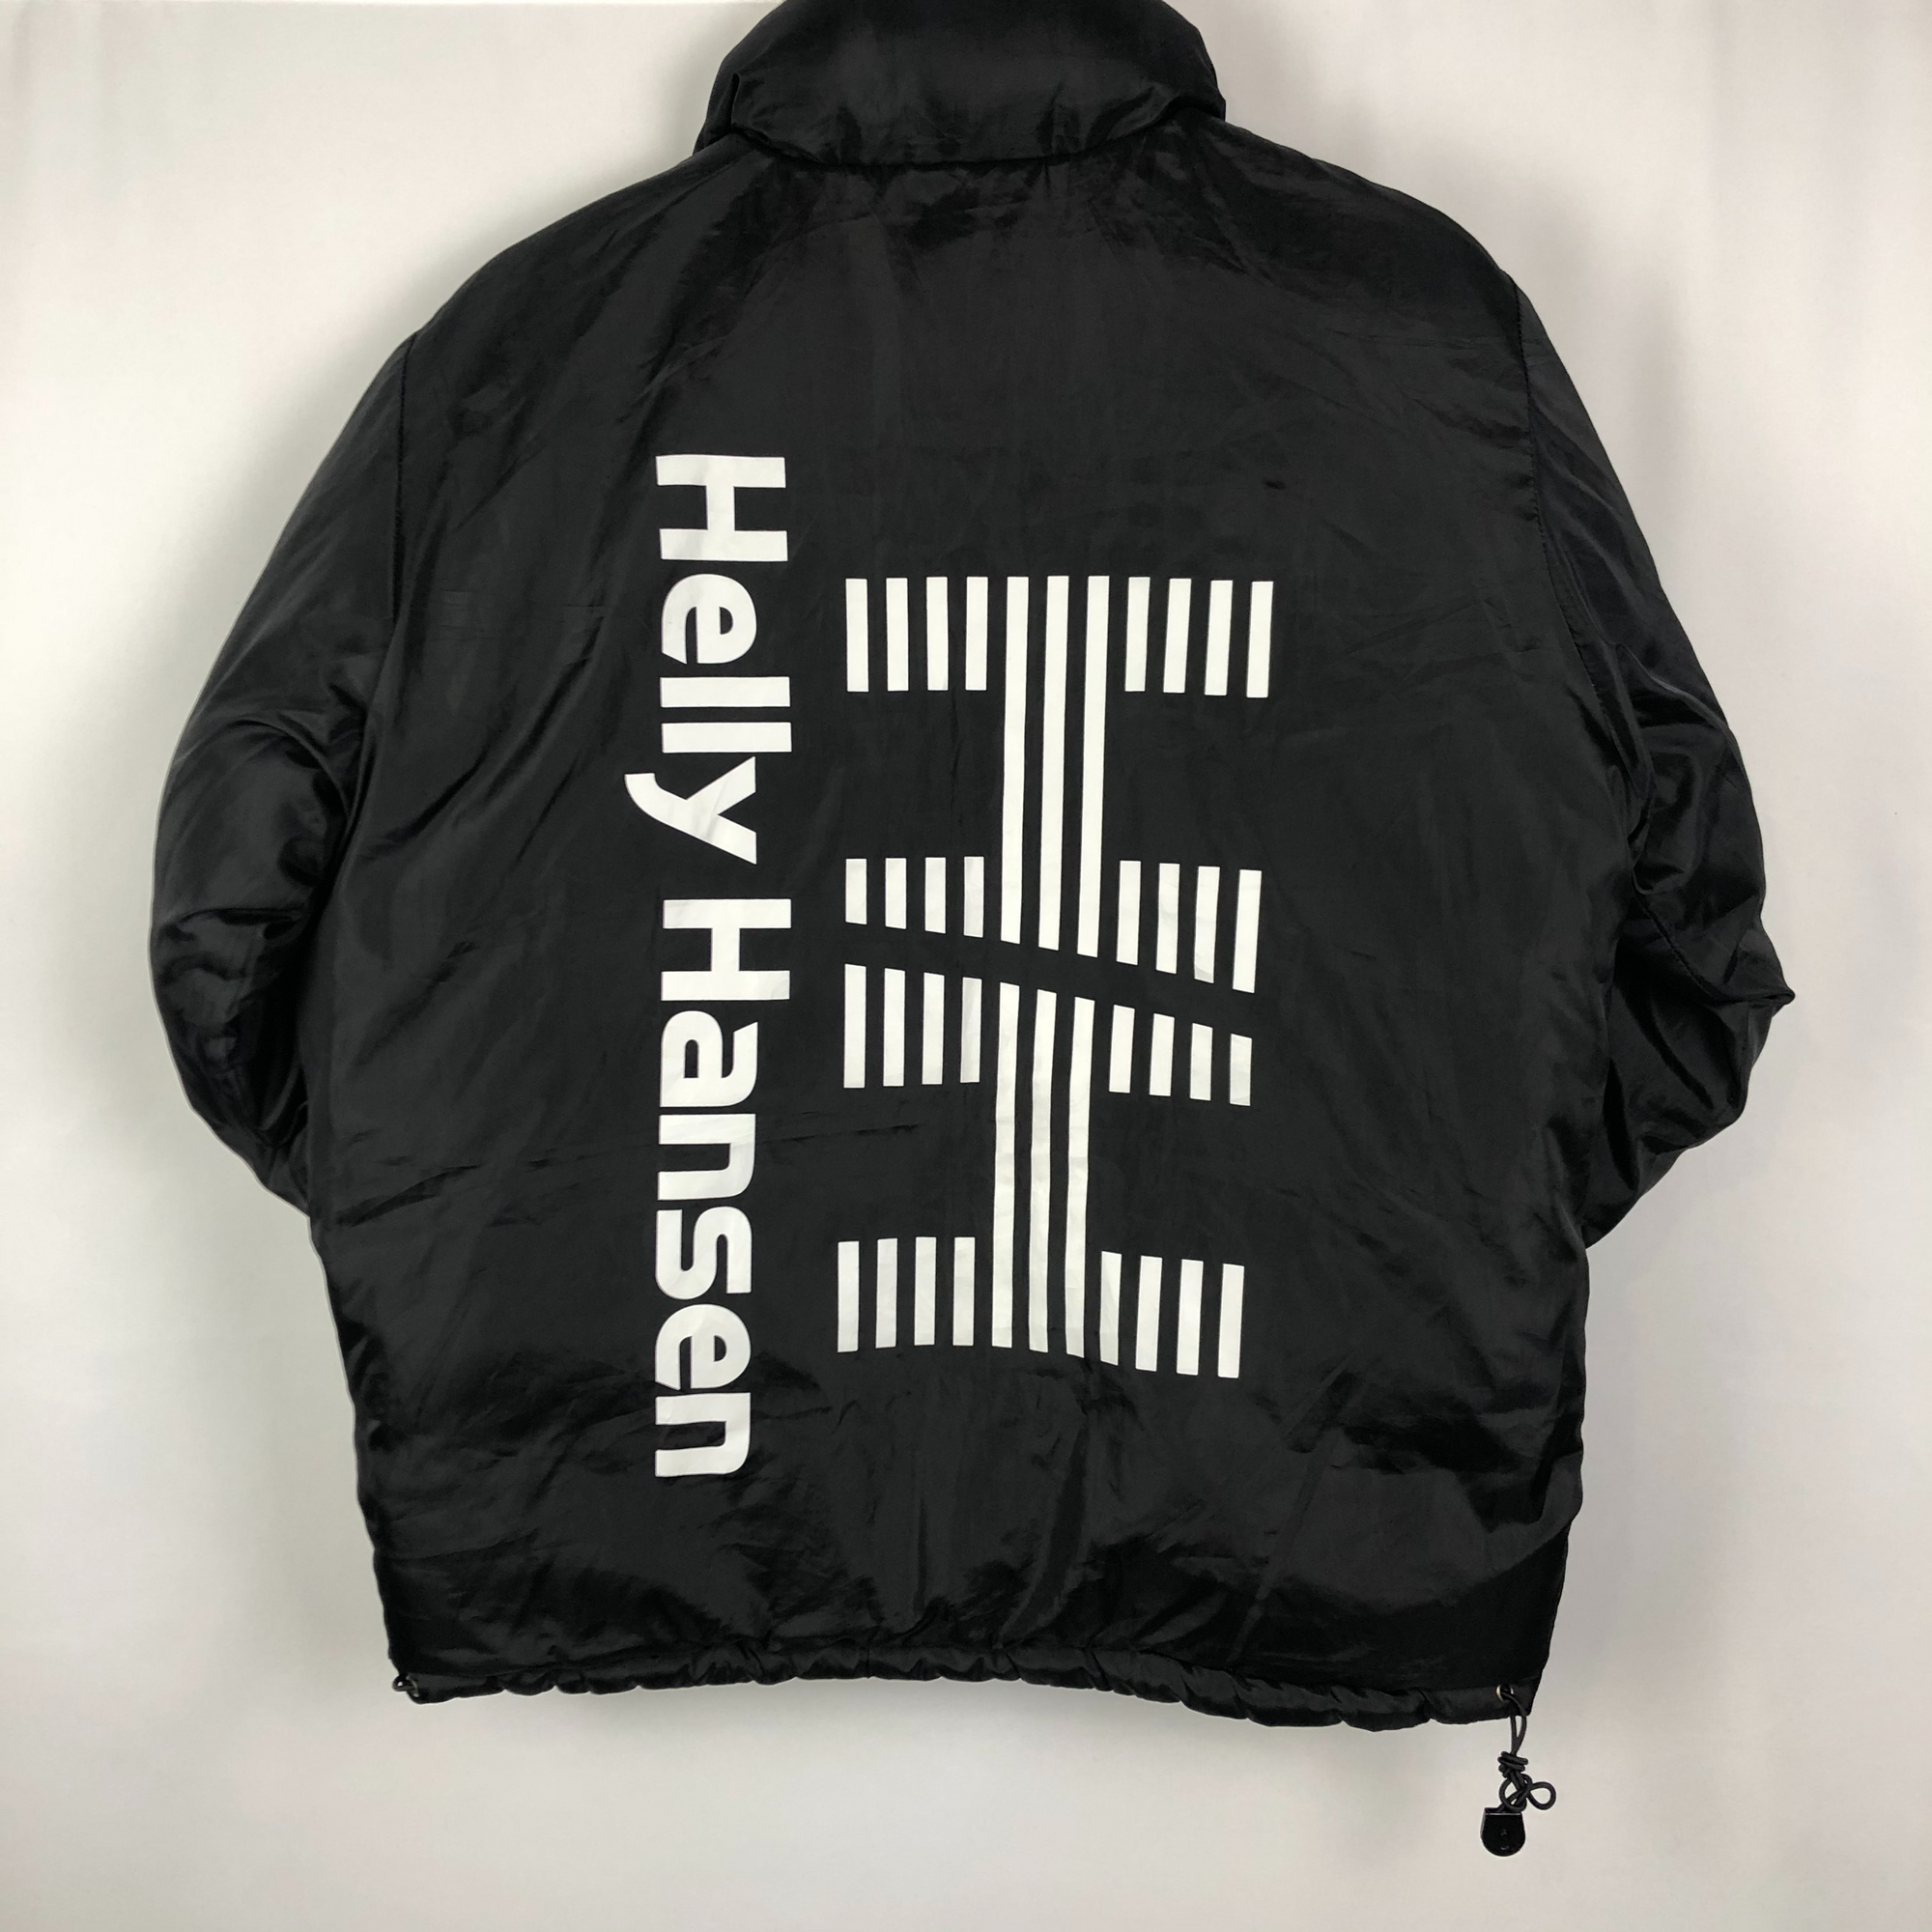 Helly Hansen Reversible Down Jacket - Men's Large/Women's XL